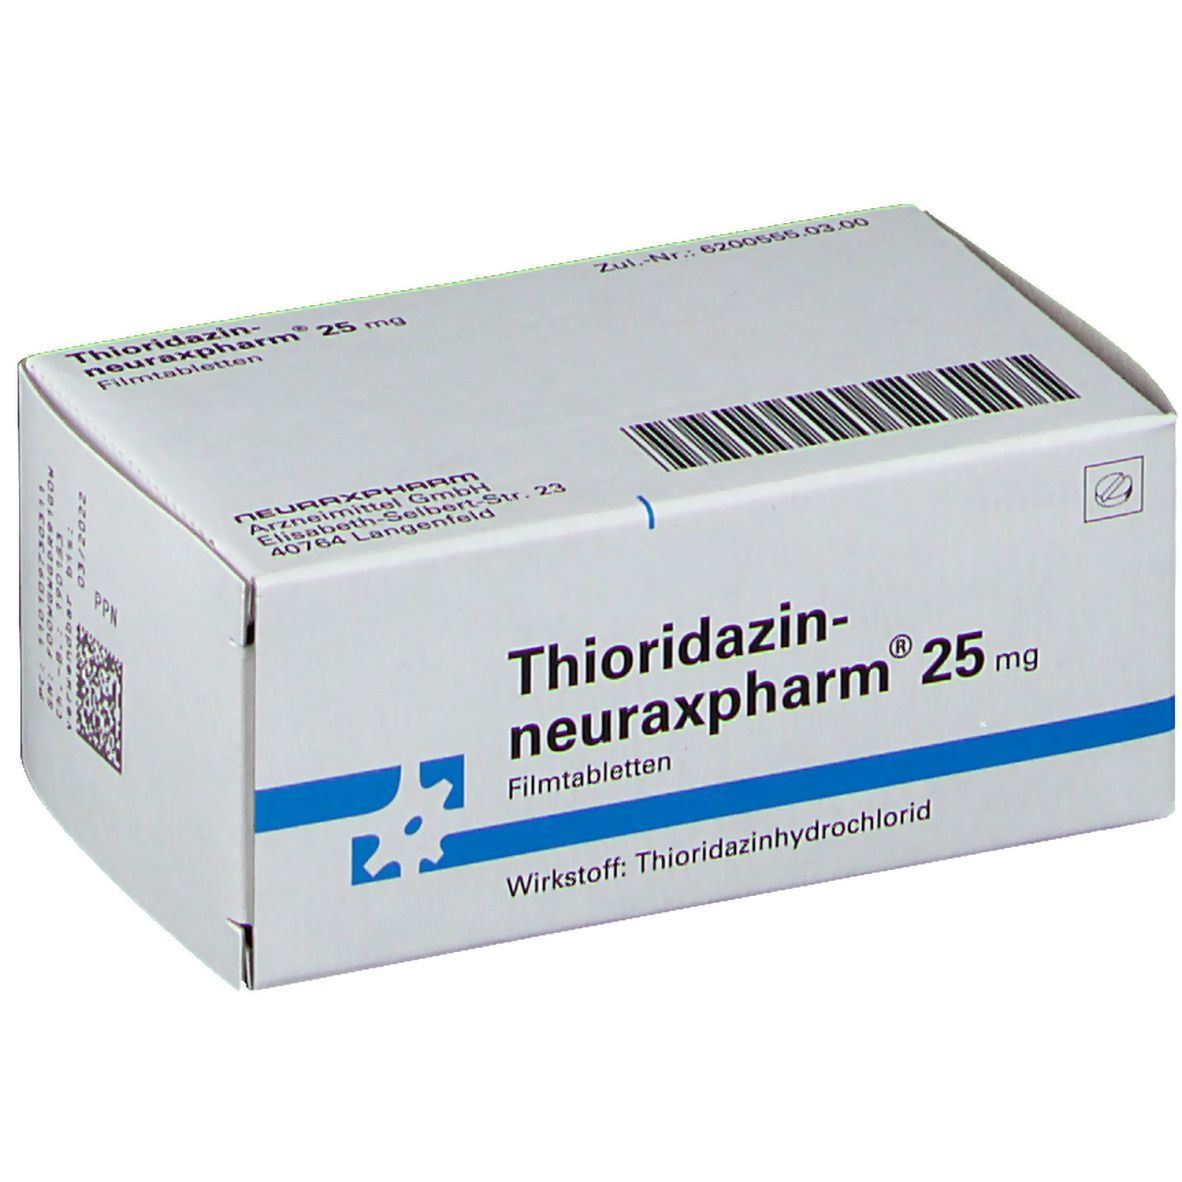 Thioridazin-neuraxpharm® 25 mg